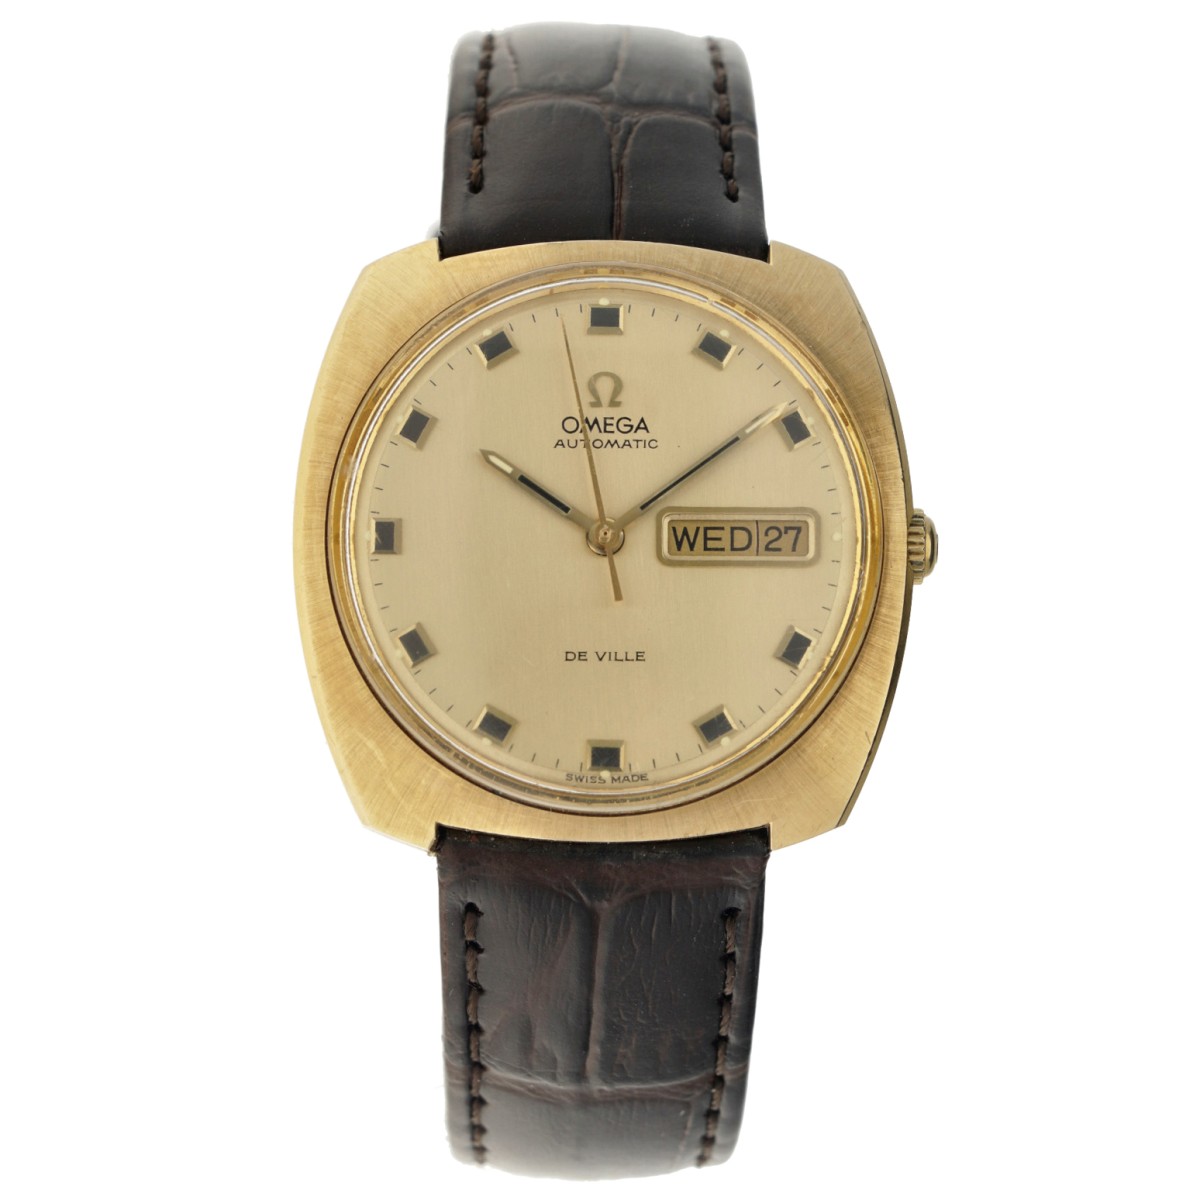 Omega De Ville - Men's watch - approx. 1970.